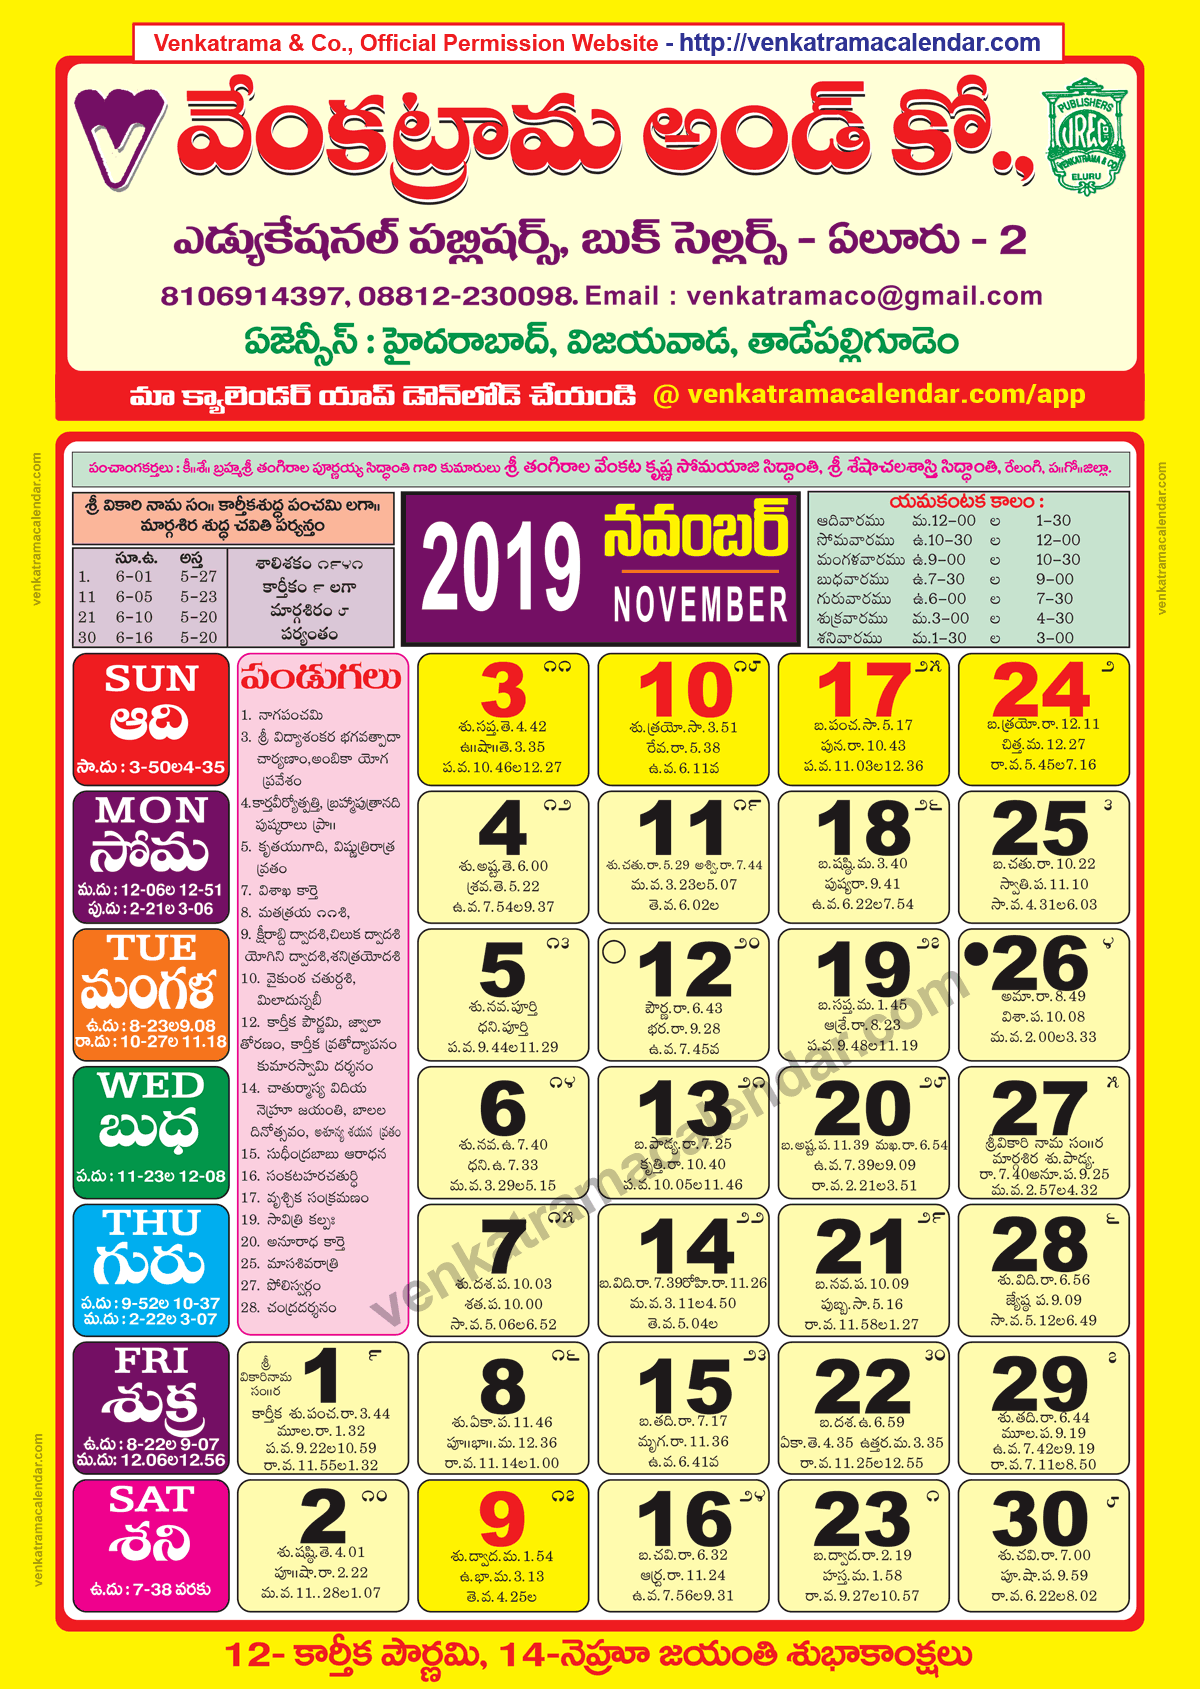 venkatrama-co-2019-november-telugu-calendar-colour